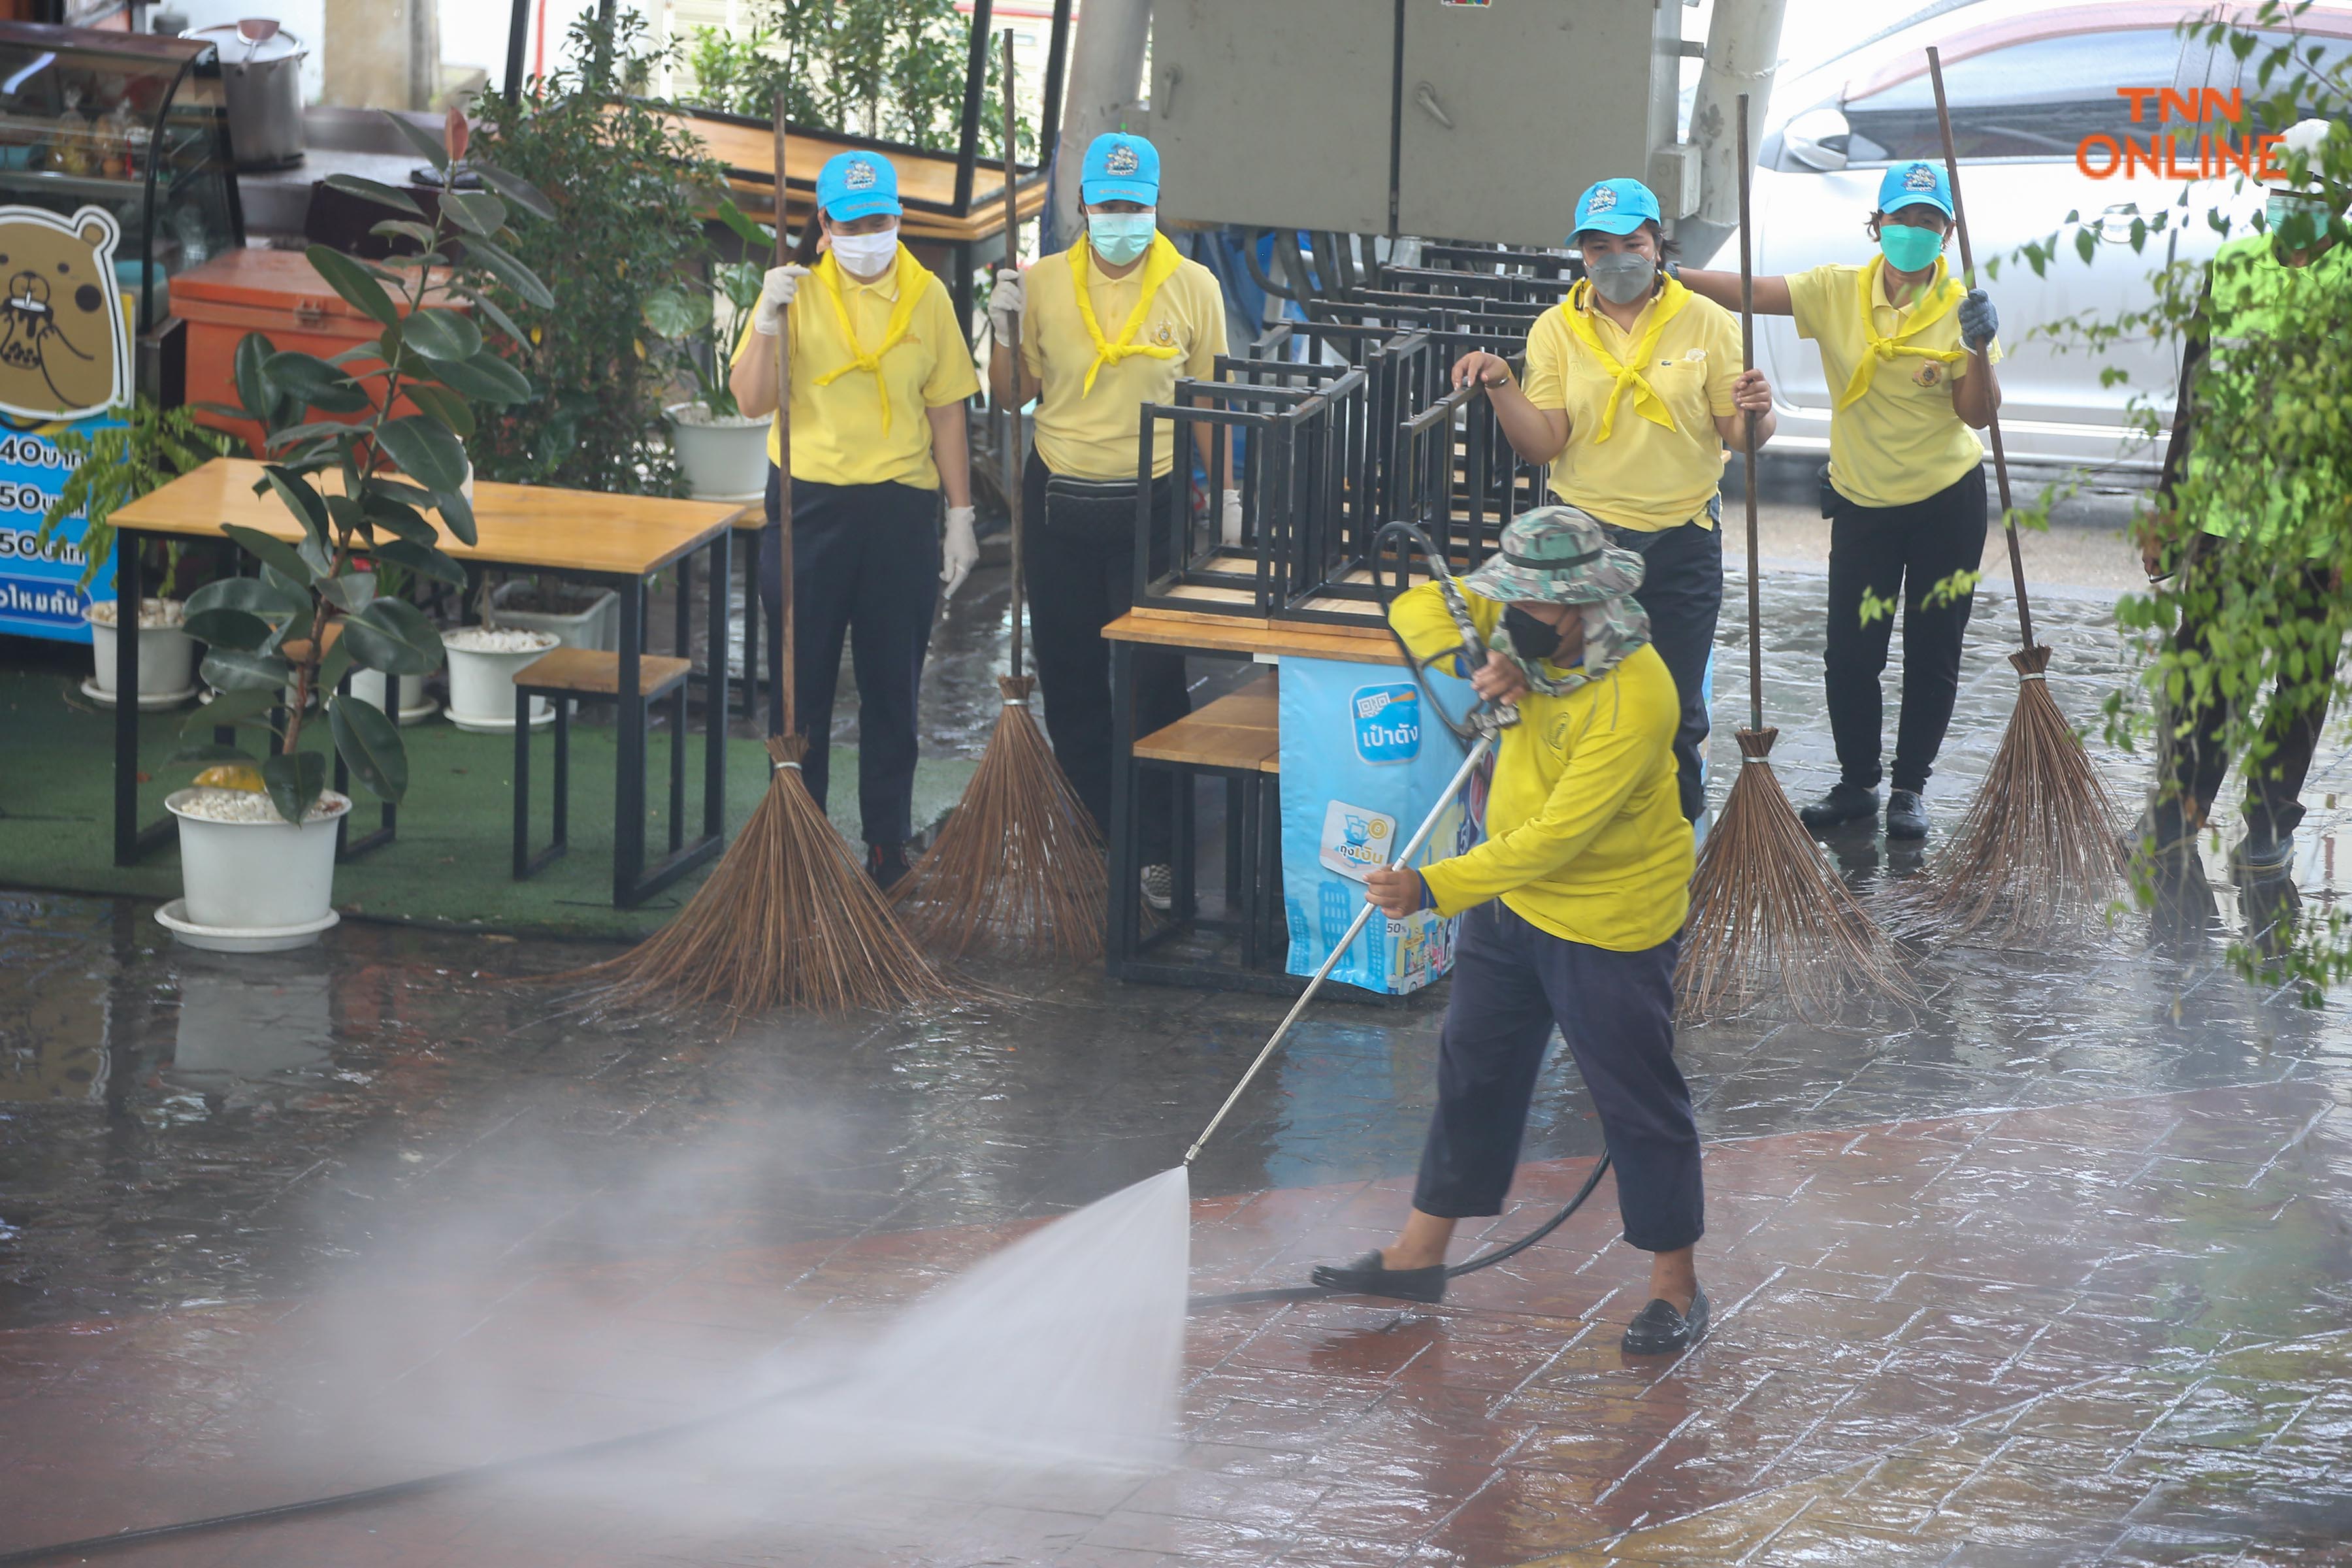 BKK Big Cleaning Day ทำความสะอาดทั่วกรุงรับคลายล็อก 1 ก.ย.นี้